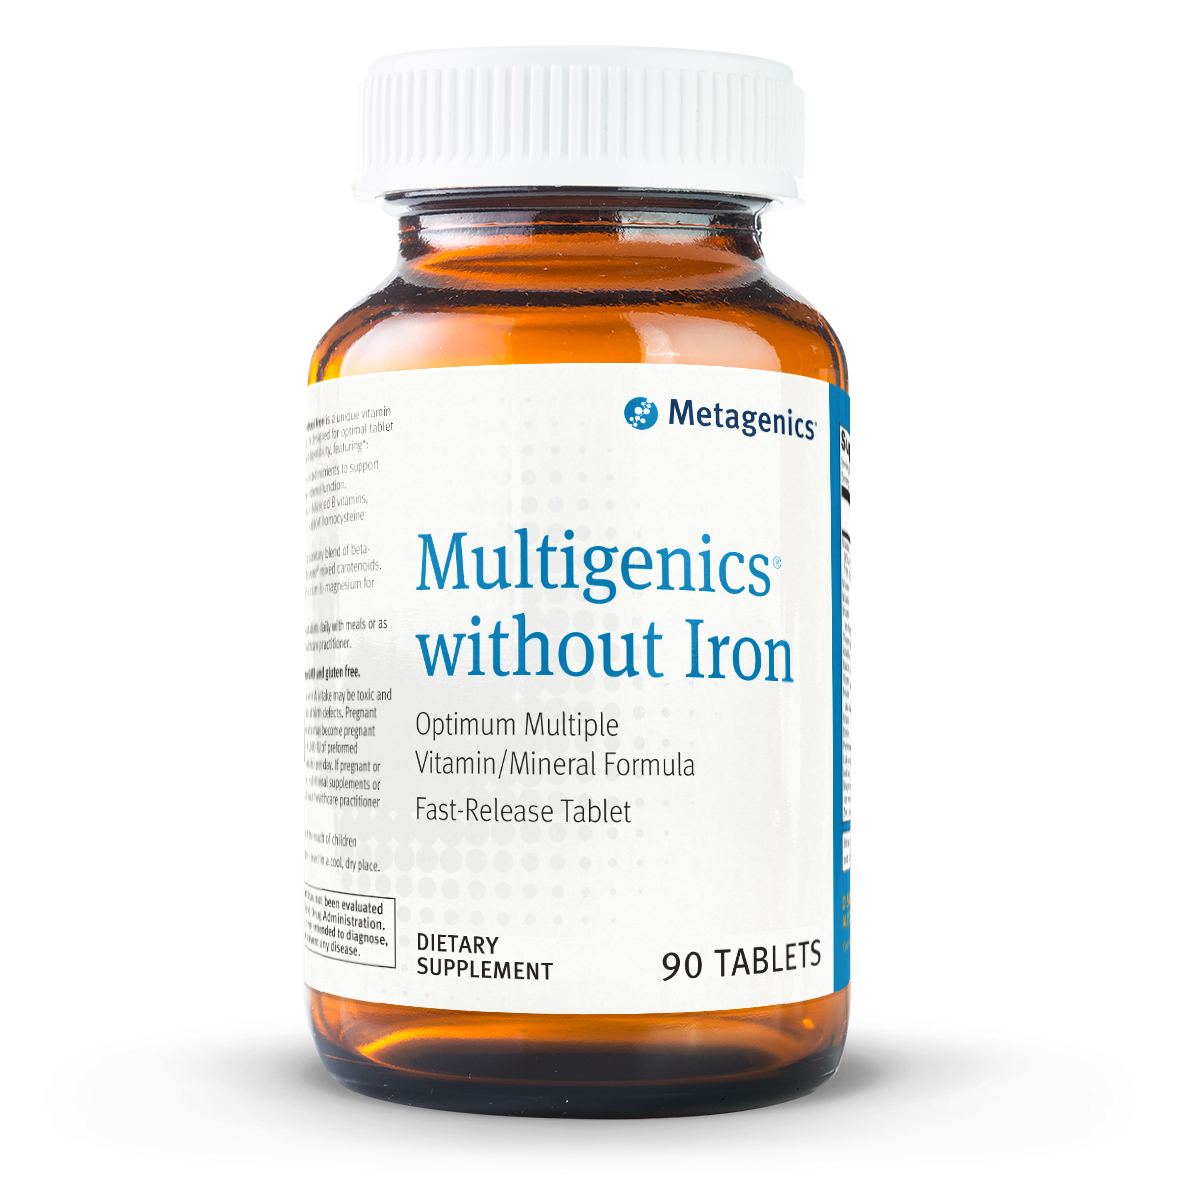 Metagenics Multigenics without Iron